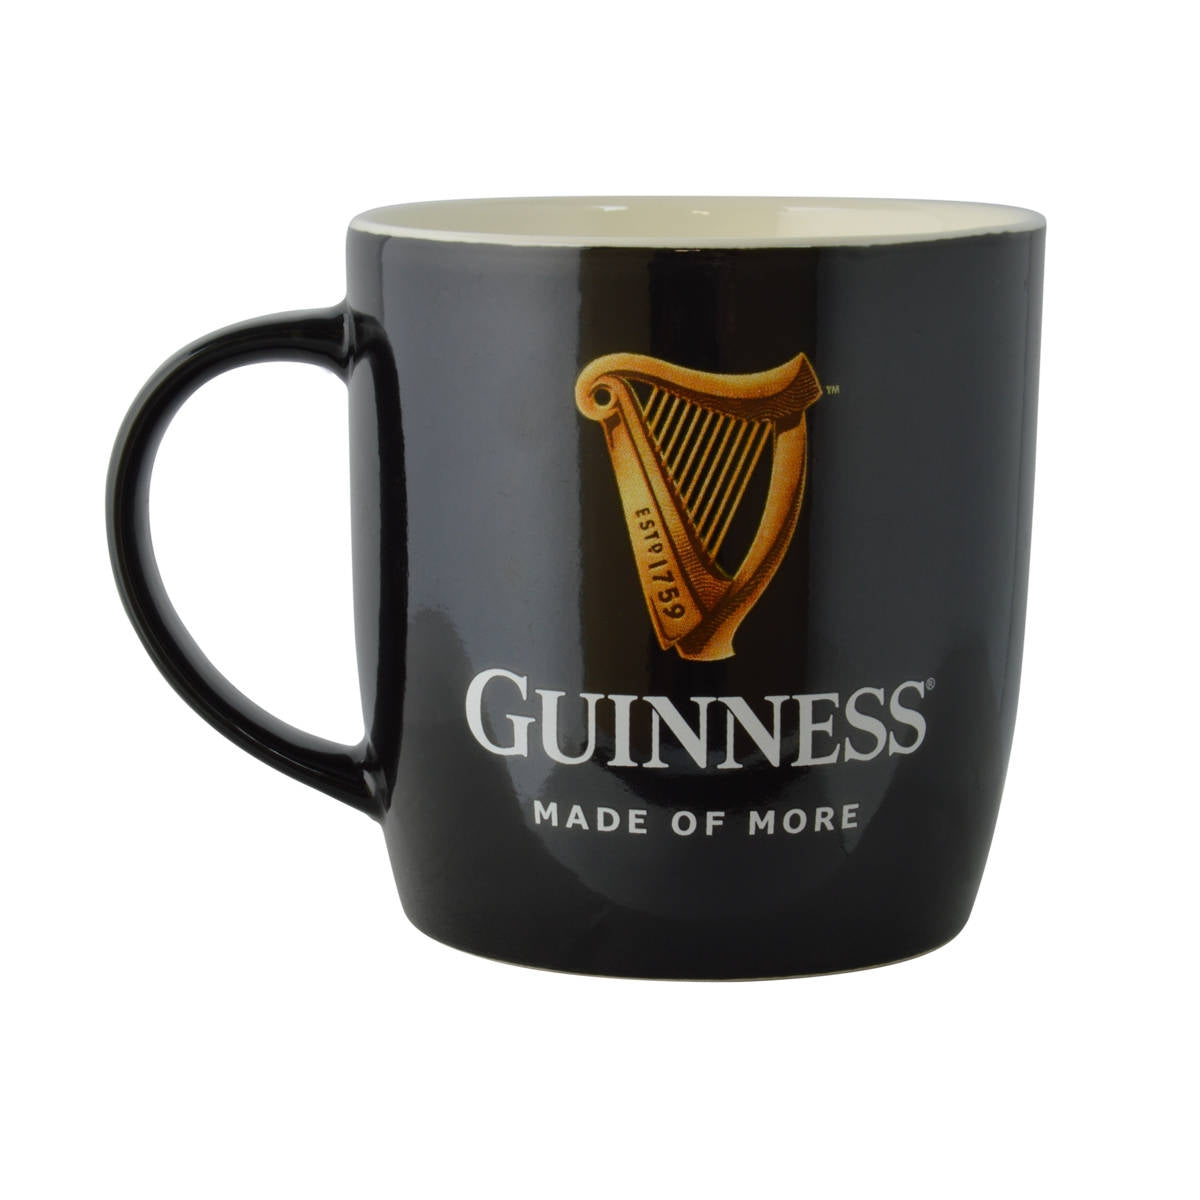 Guinness Black Mug with Official Harp Logo by Guinness.